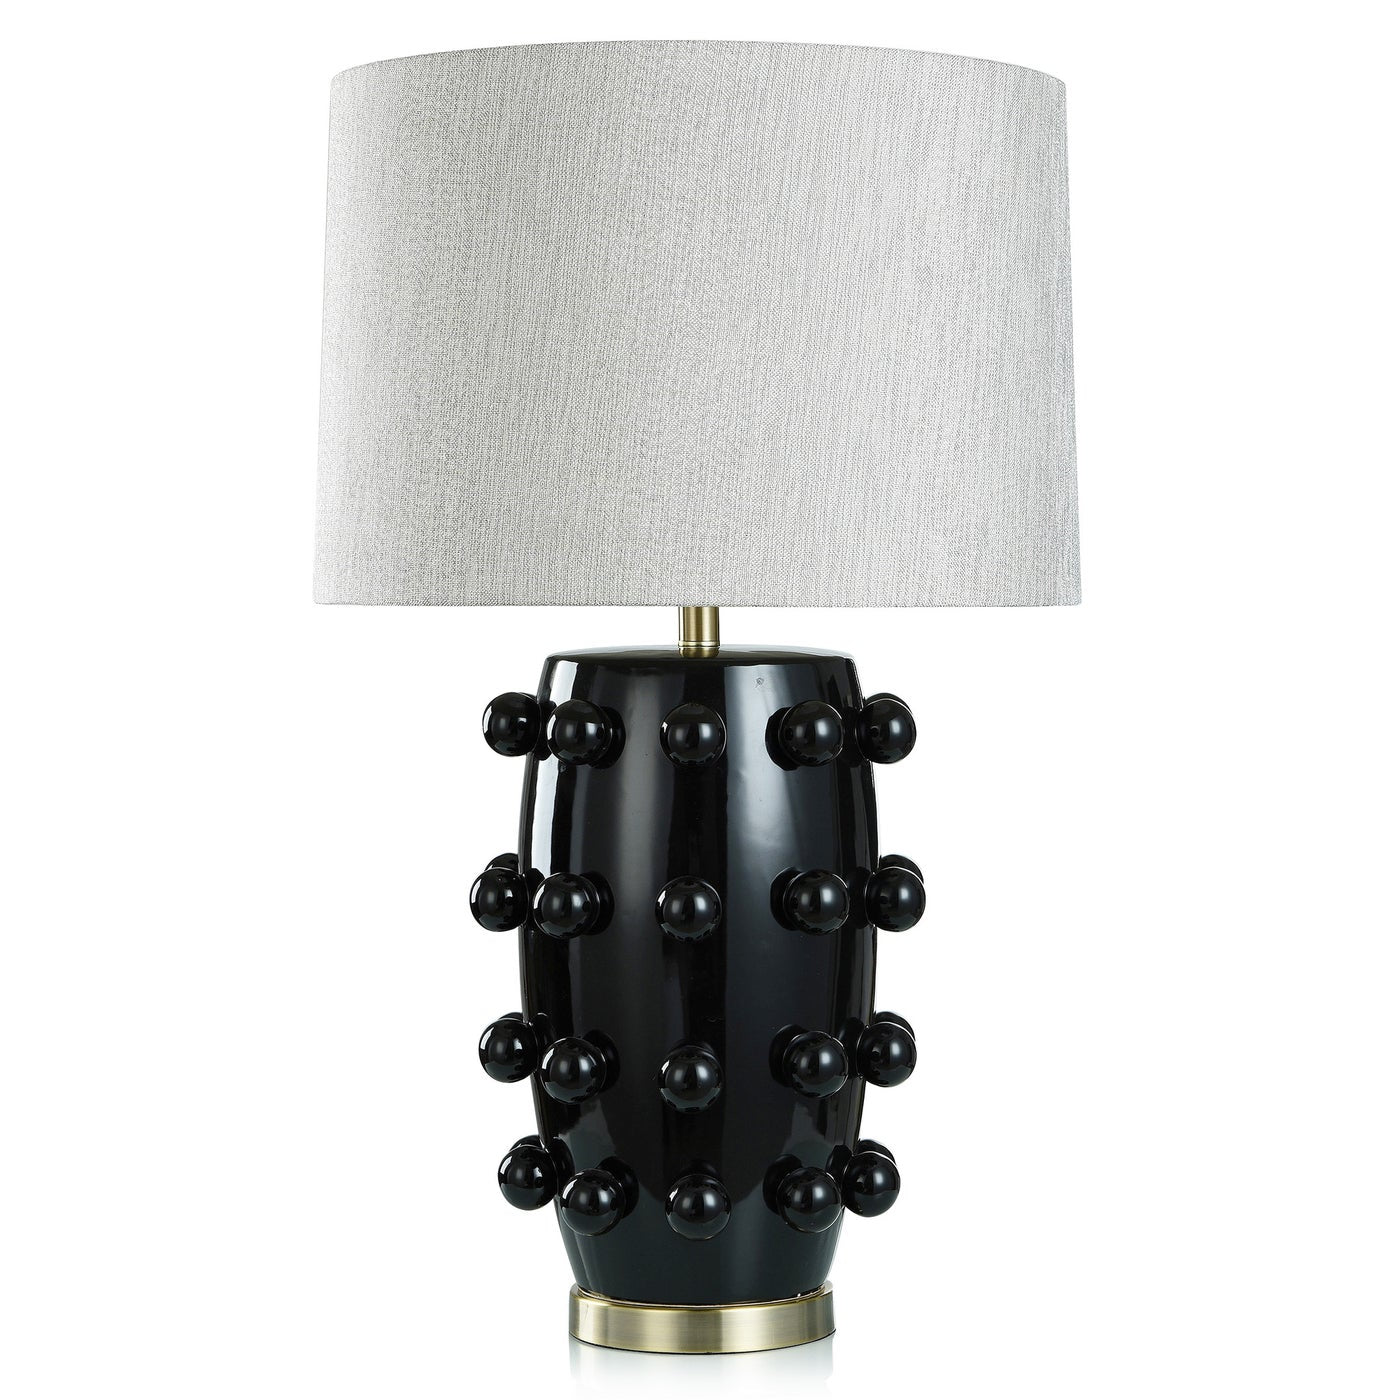 MARNI TABLE LAMP- BLACK | Black Finish on Ceramic Body with Brass Base | Hardback Shade